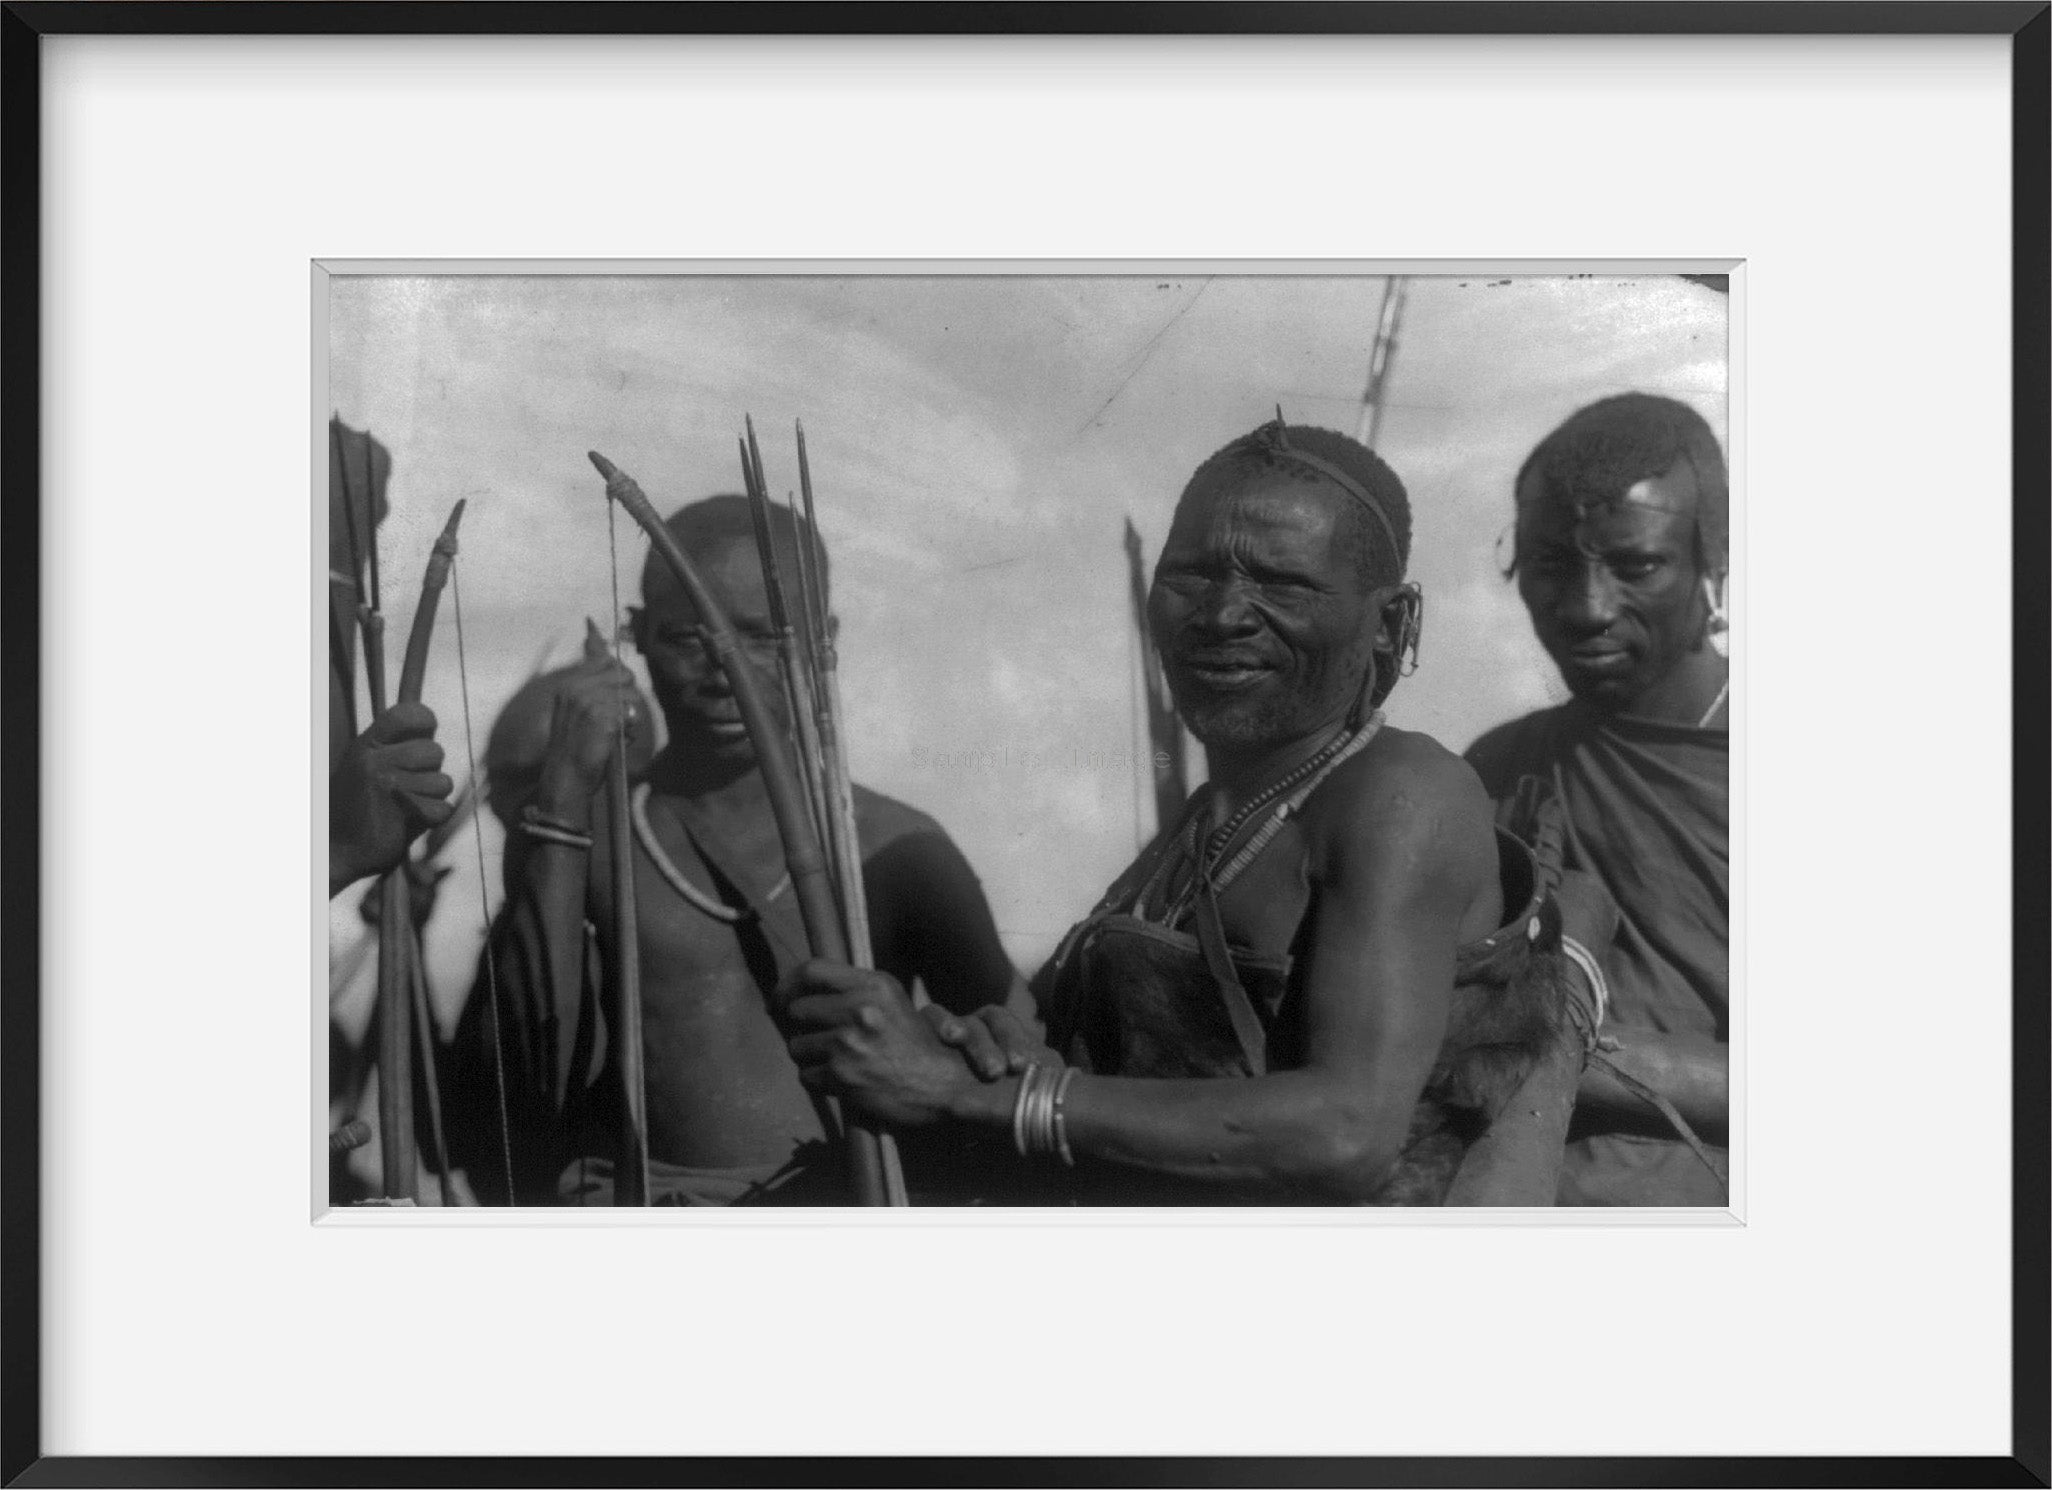 1928 photograph of African hunters (Masai?)